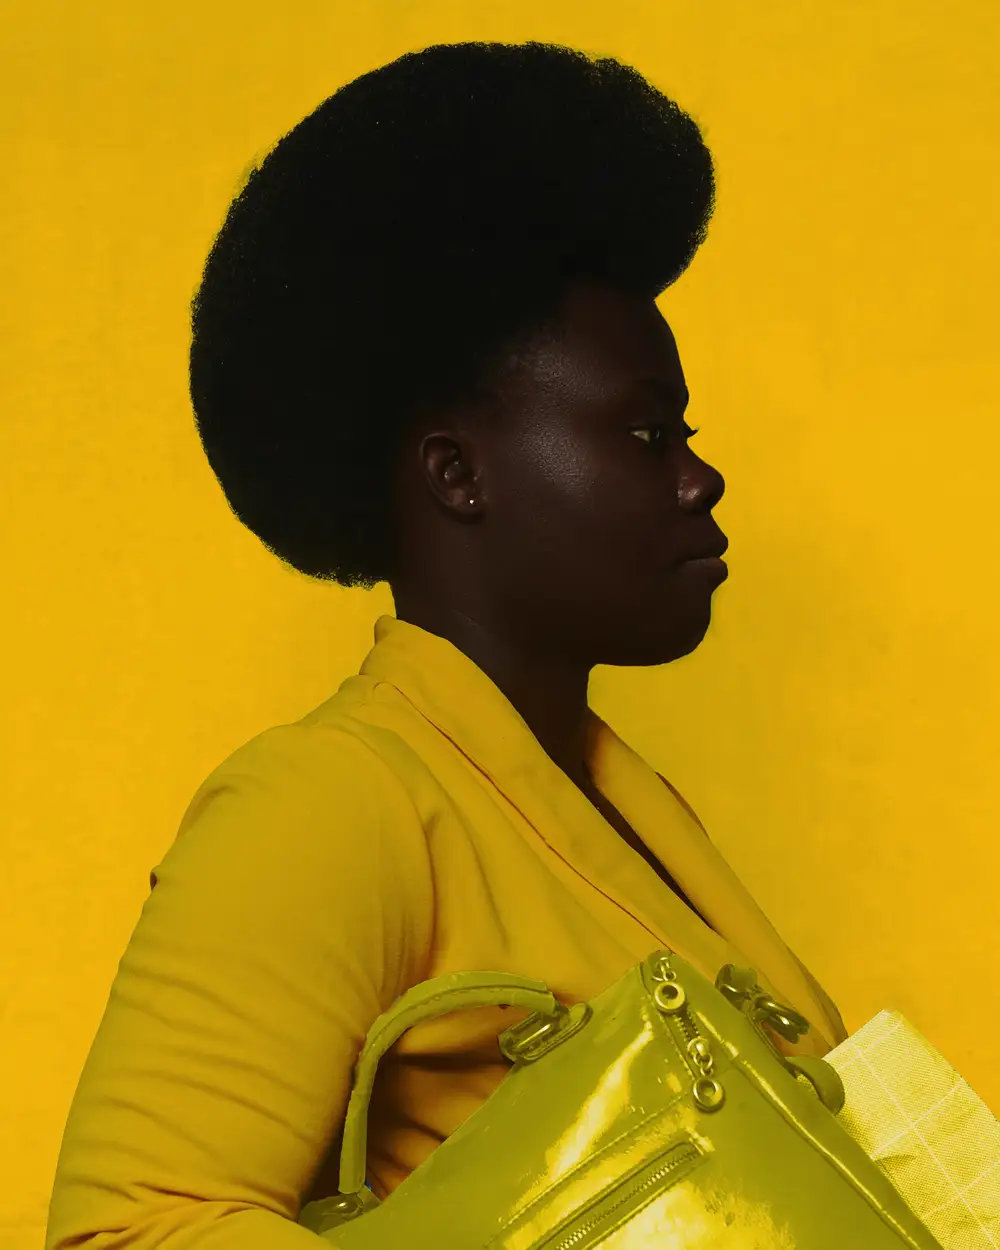 Black woman with hand bag on yellow.